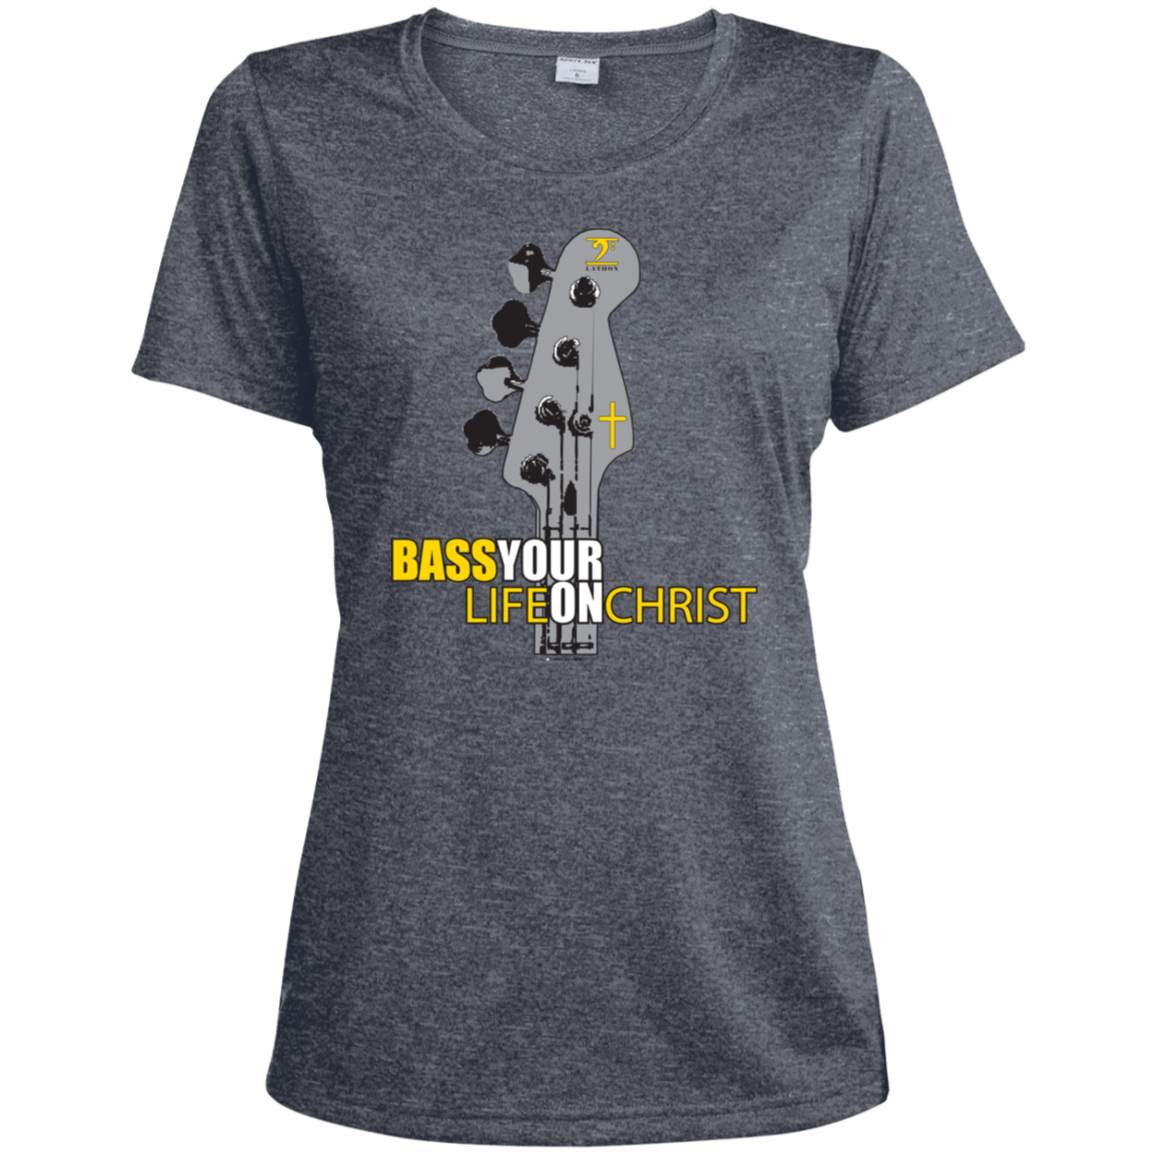 BASS YOUR LIFE ON CHRIST Ladies' Heather Dri-Fit Moisture-Wicking T-Shirt - Lathon Bass Wear